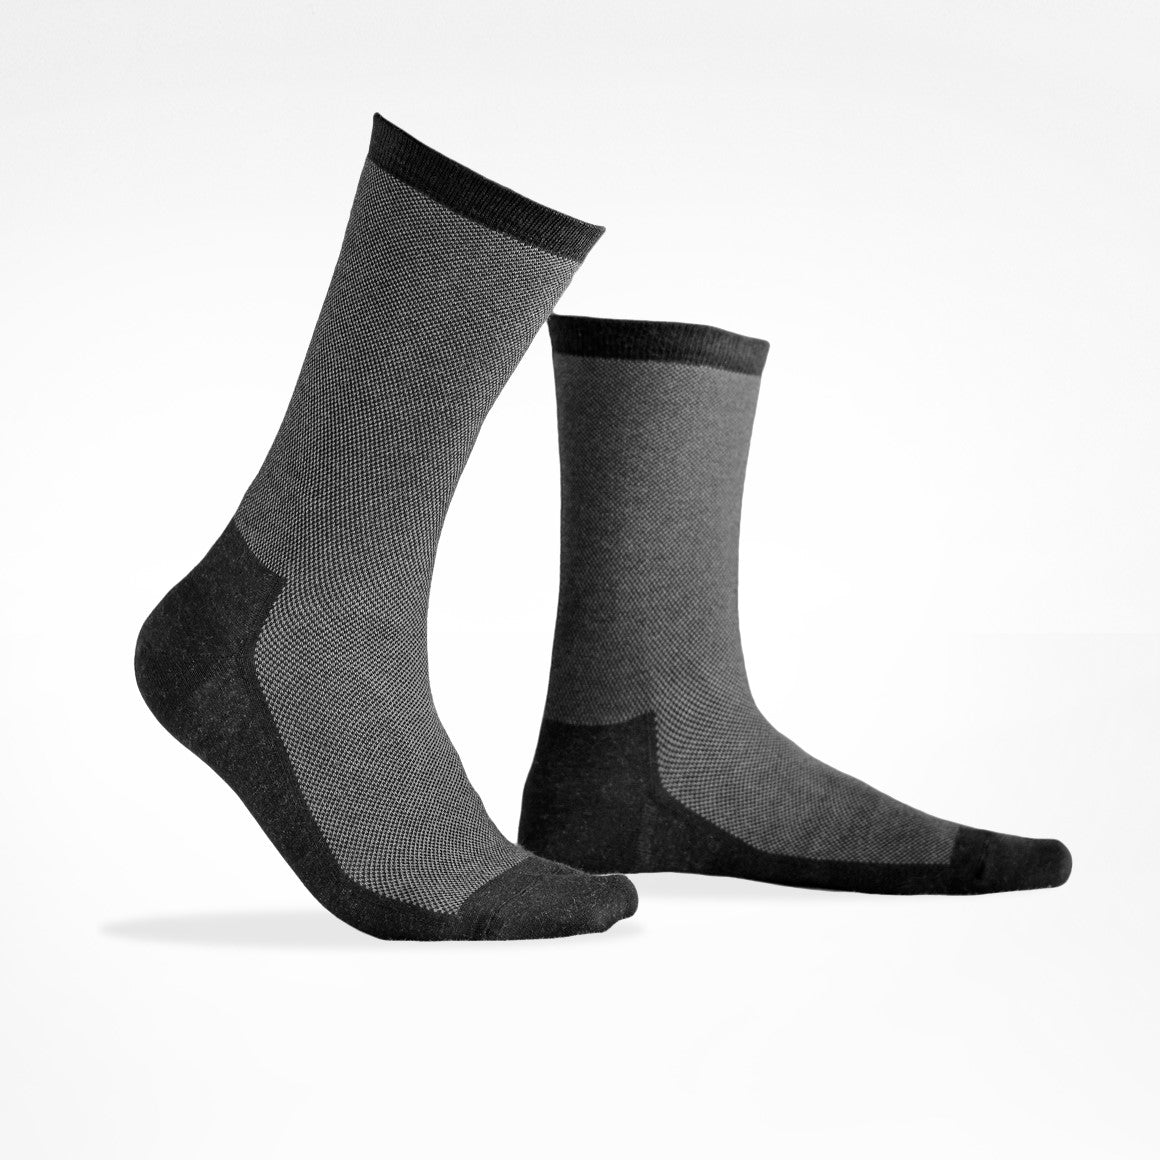 Silver Socks - 2 Pairs,  Original Calf Length - SWEAT GUARD® Footcare